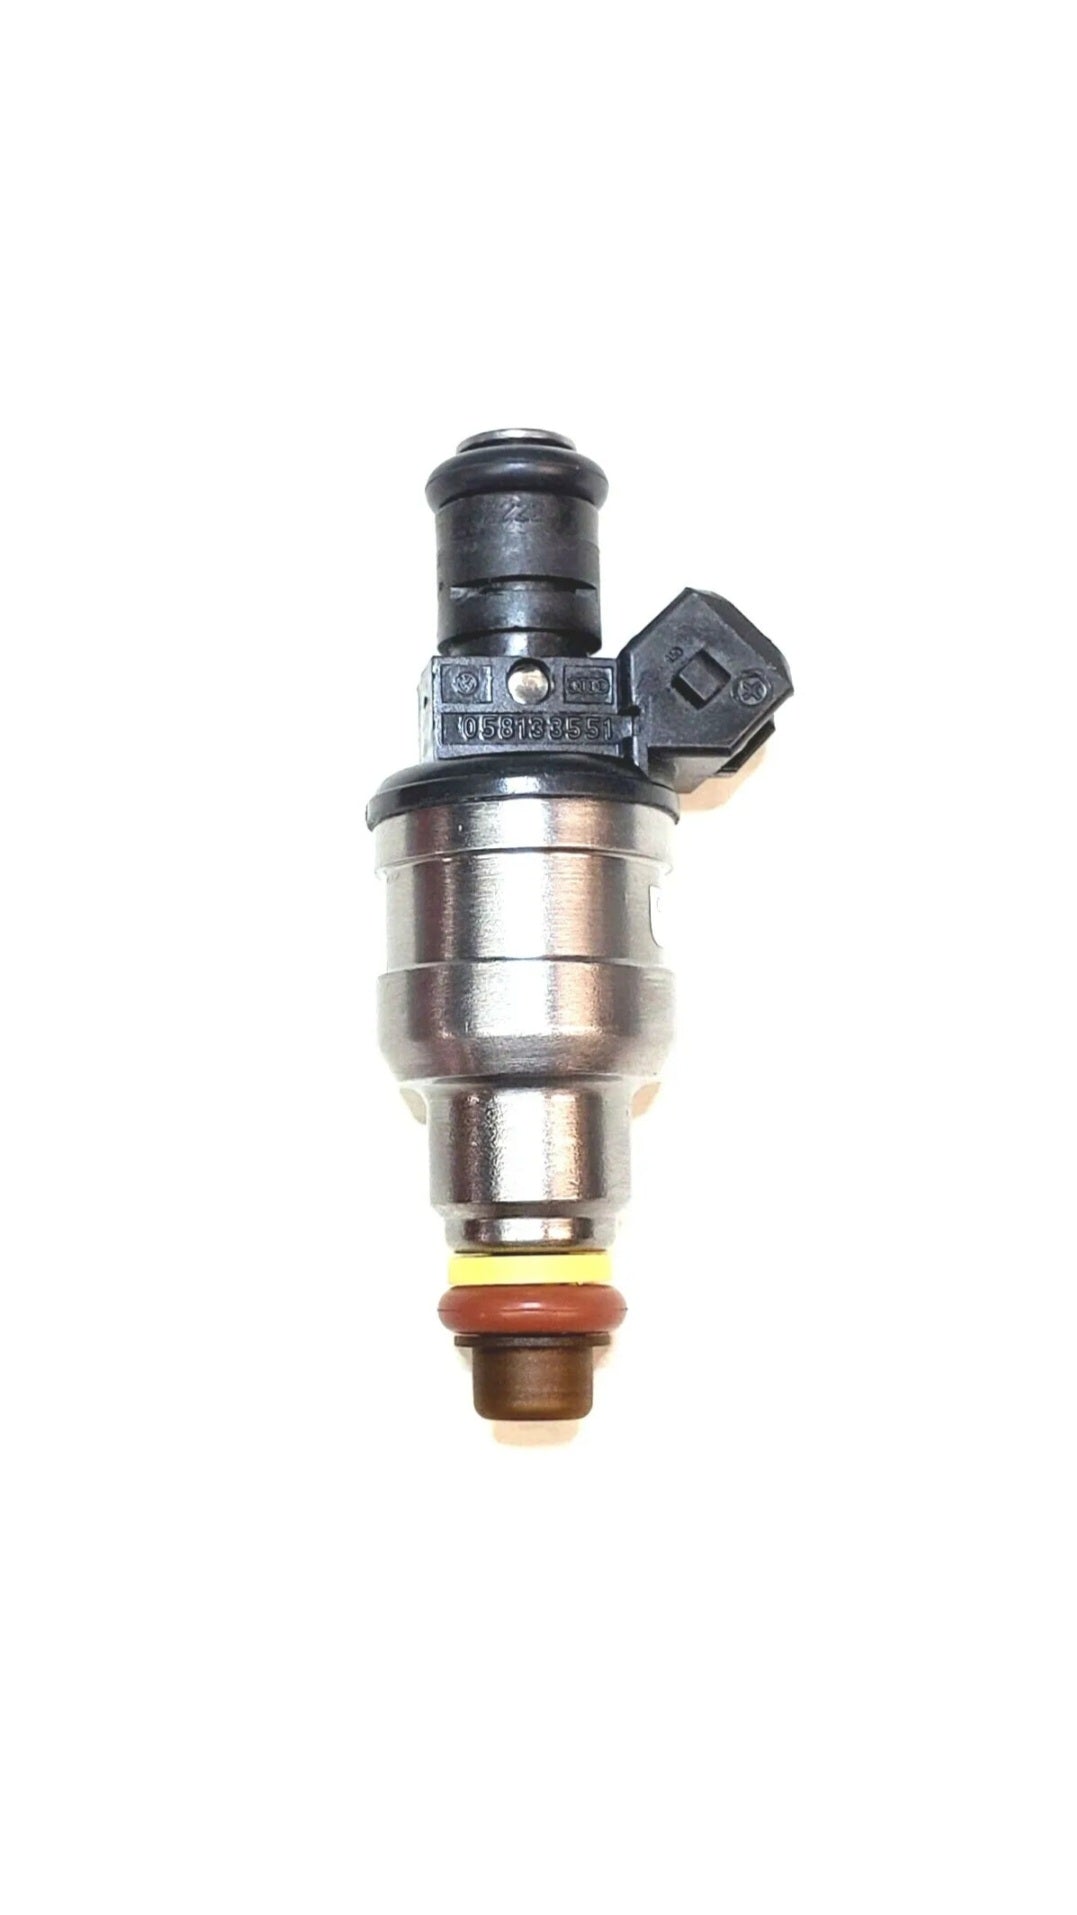 4 Genuine Bosch 0280150447 / 058133551 fuel injectors